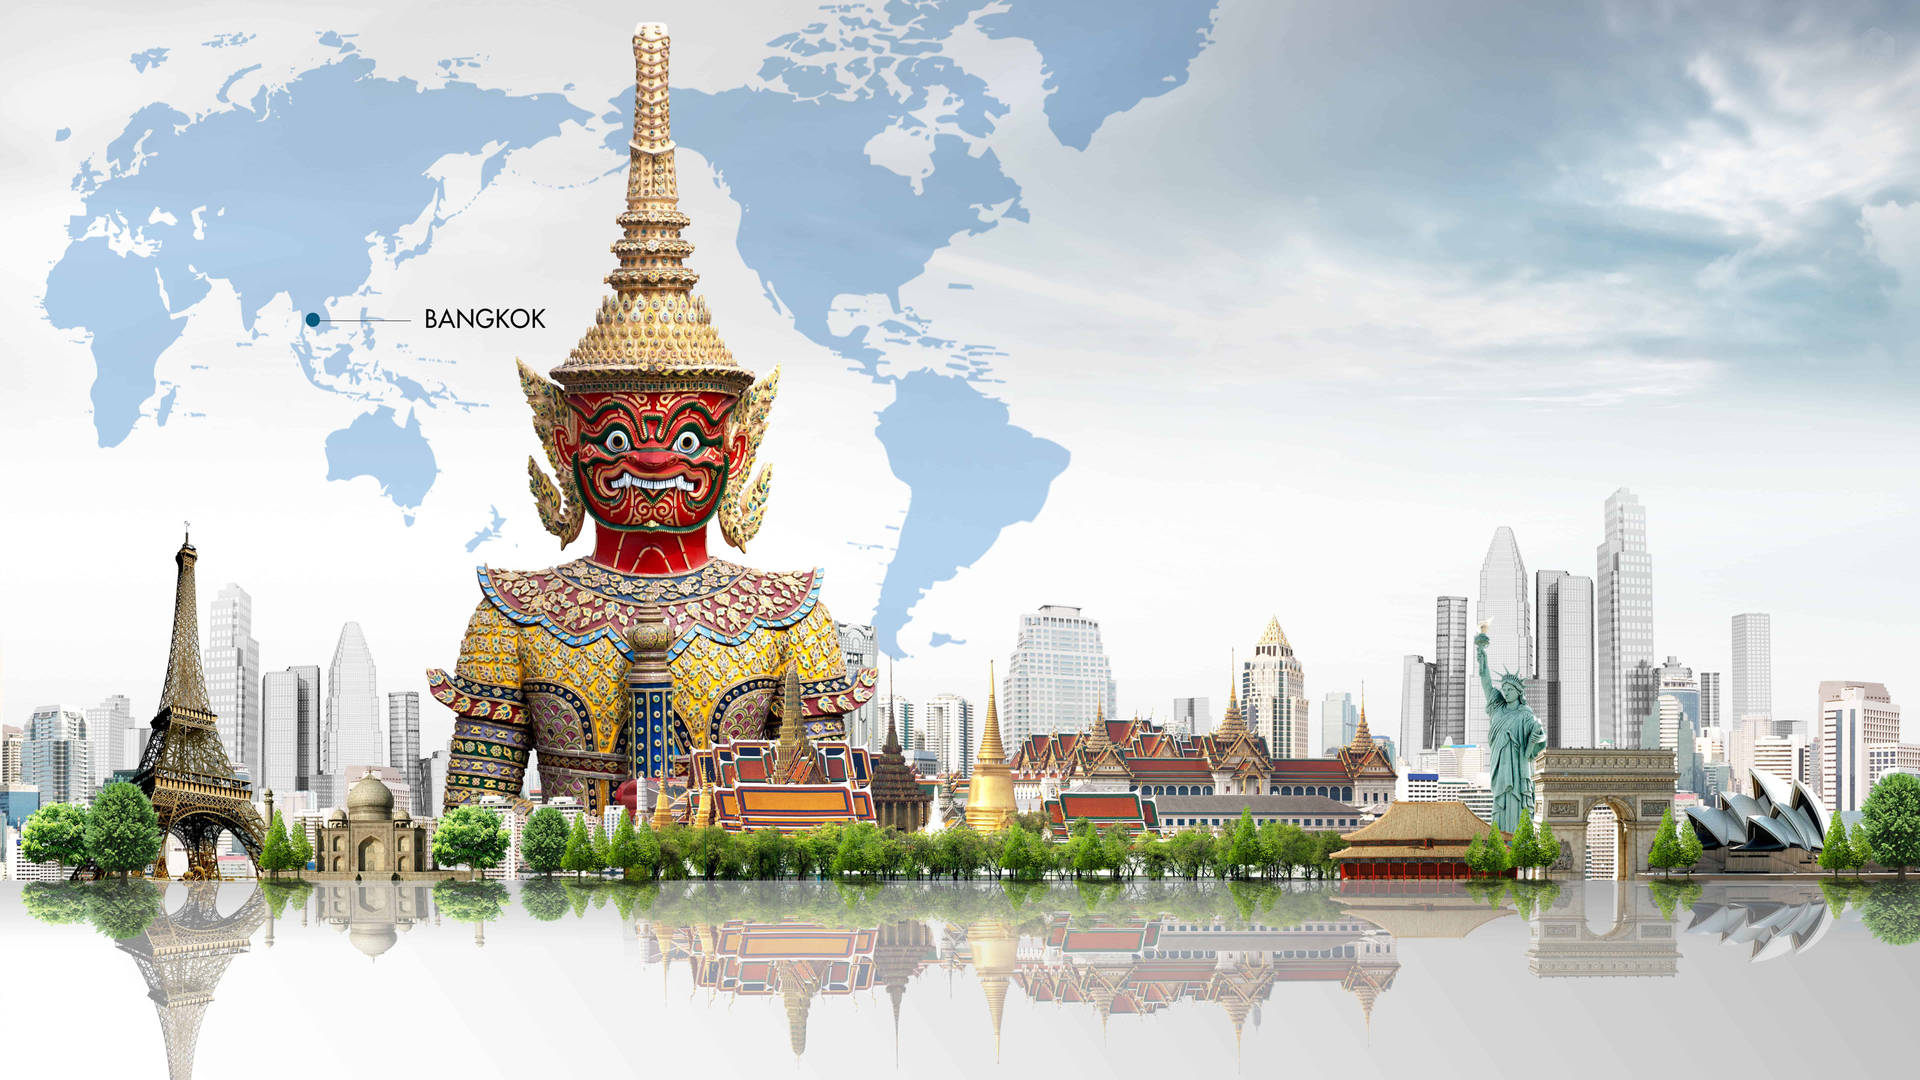 Bangkok City Digital Art Background